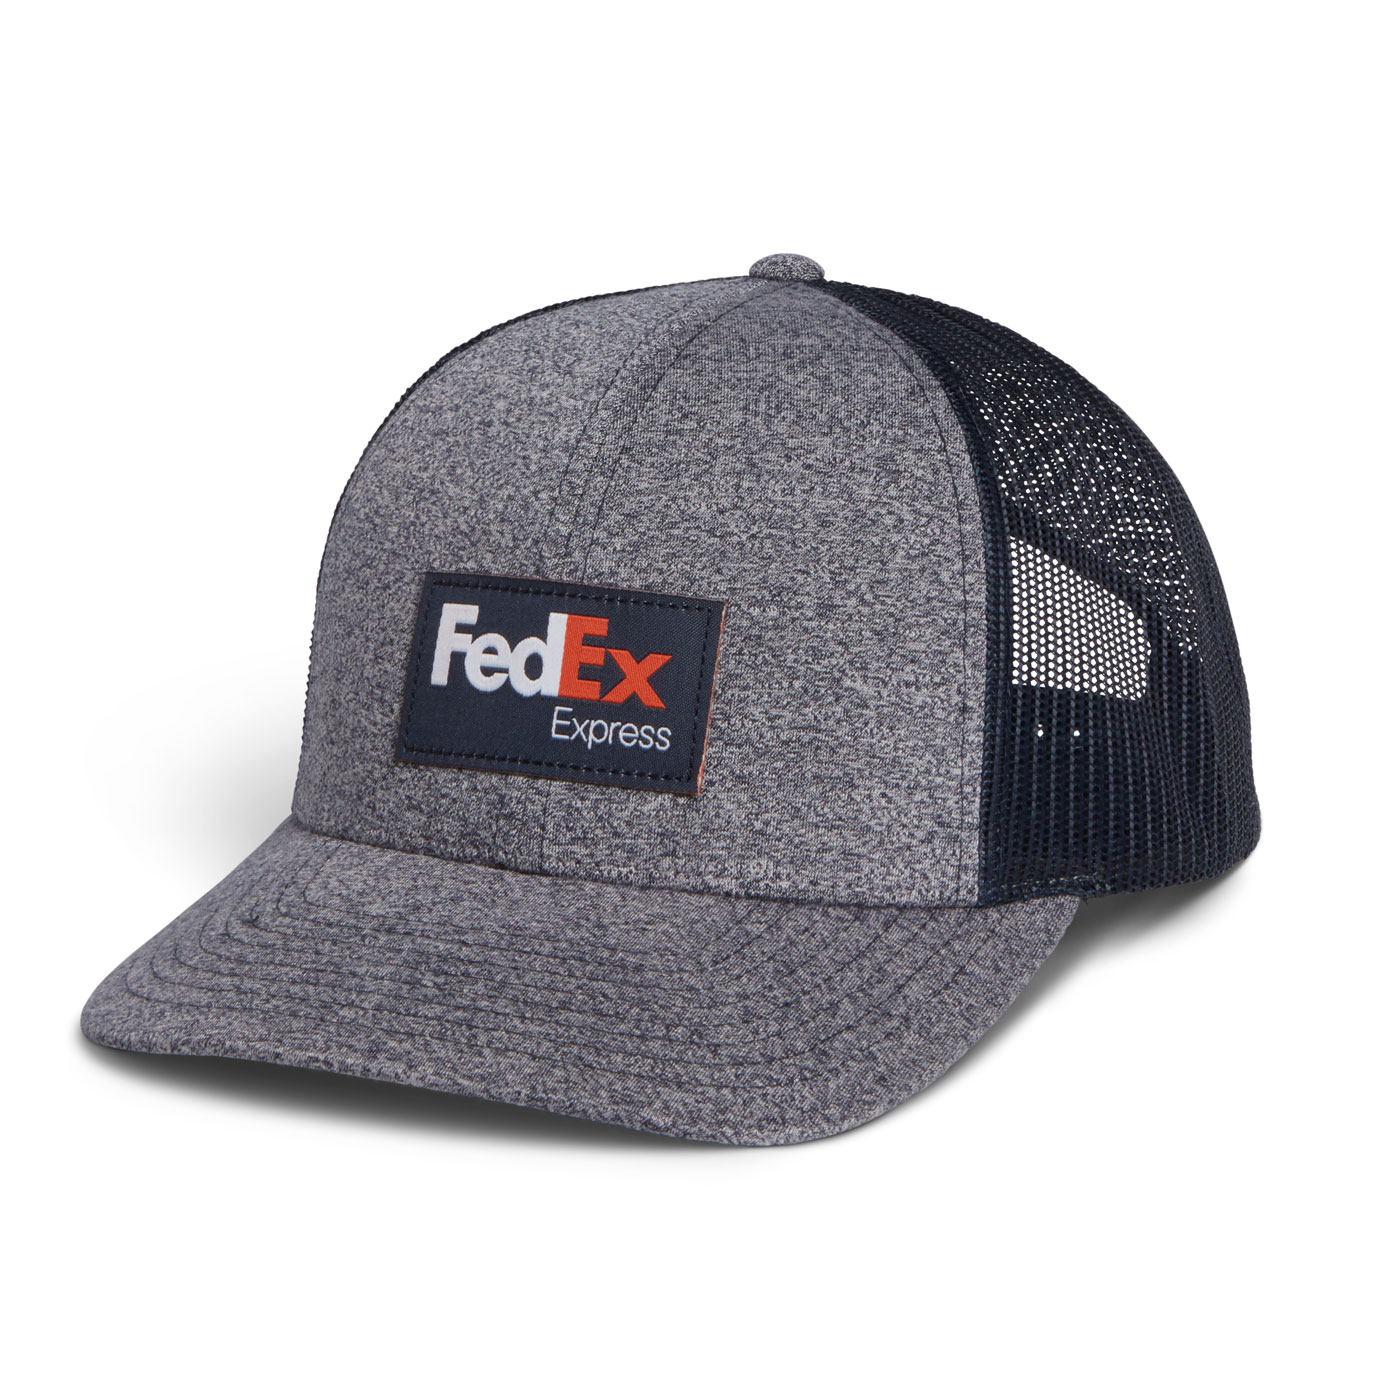 FedEx Express Low-Pro Heathered Trucker Cap | The FedEx Company Store